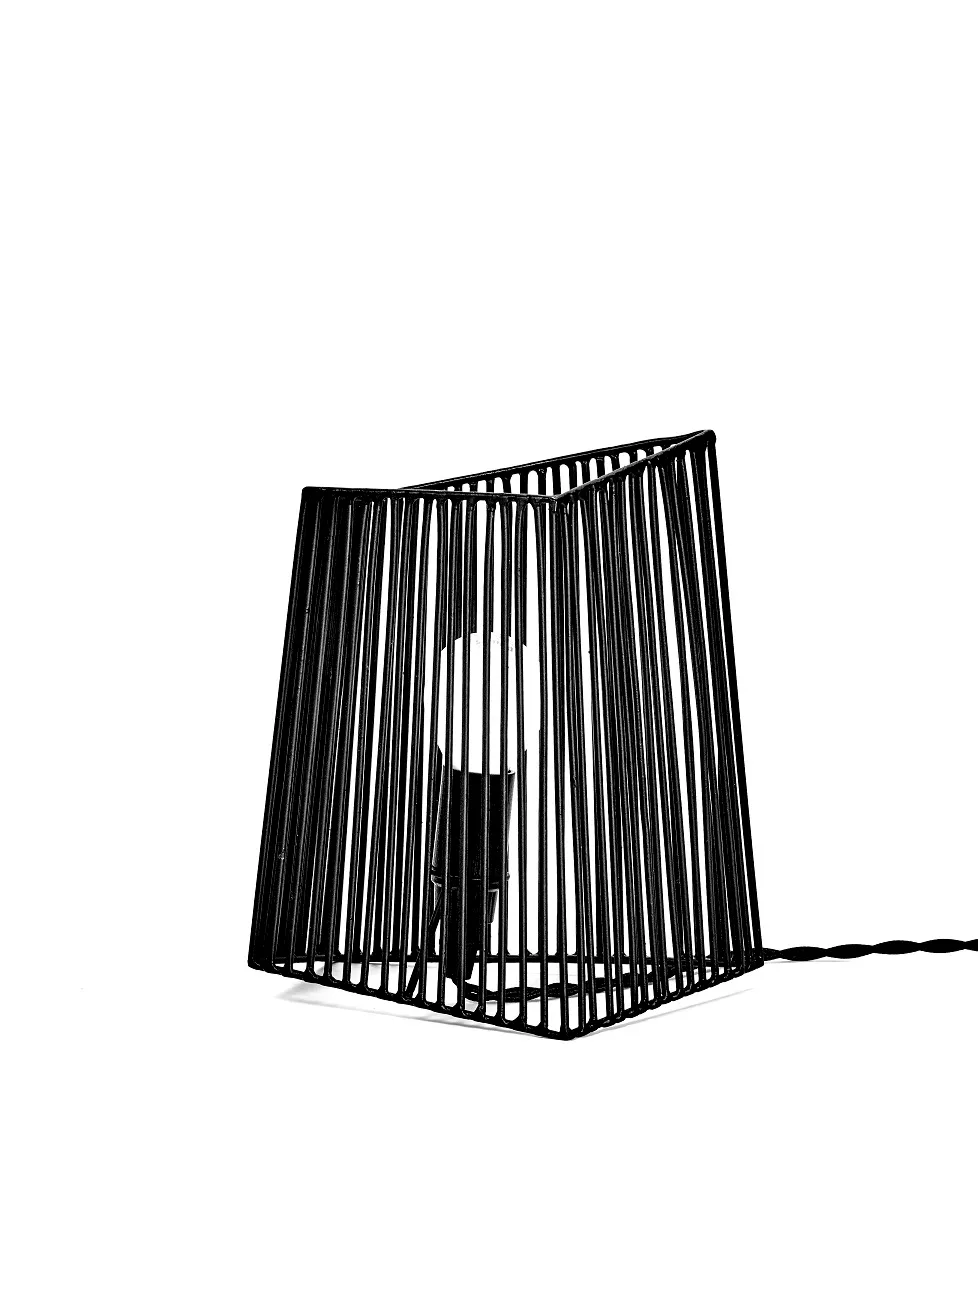 Wall/Table Lamp M Ombre Black L 17 W 12.5 H 20CM by Antonino Sciortino